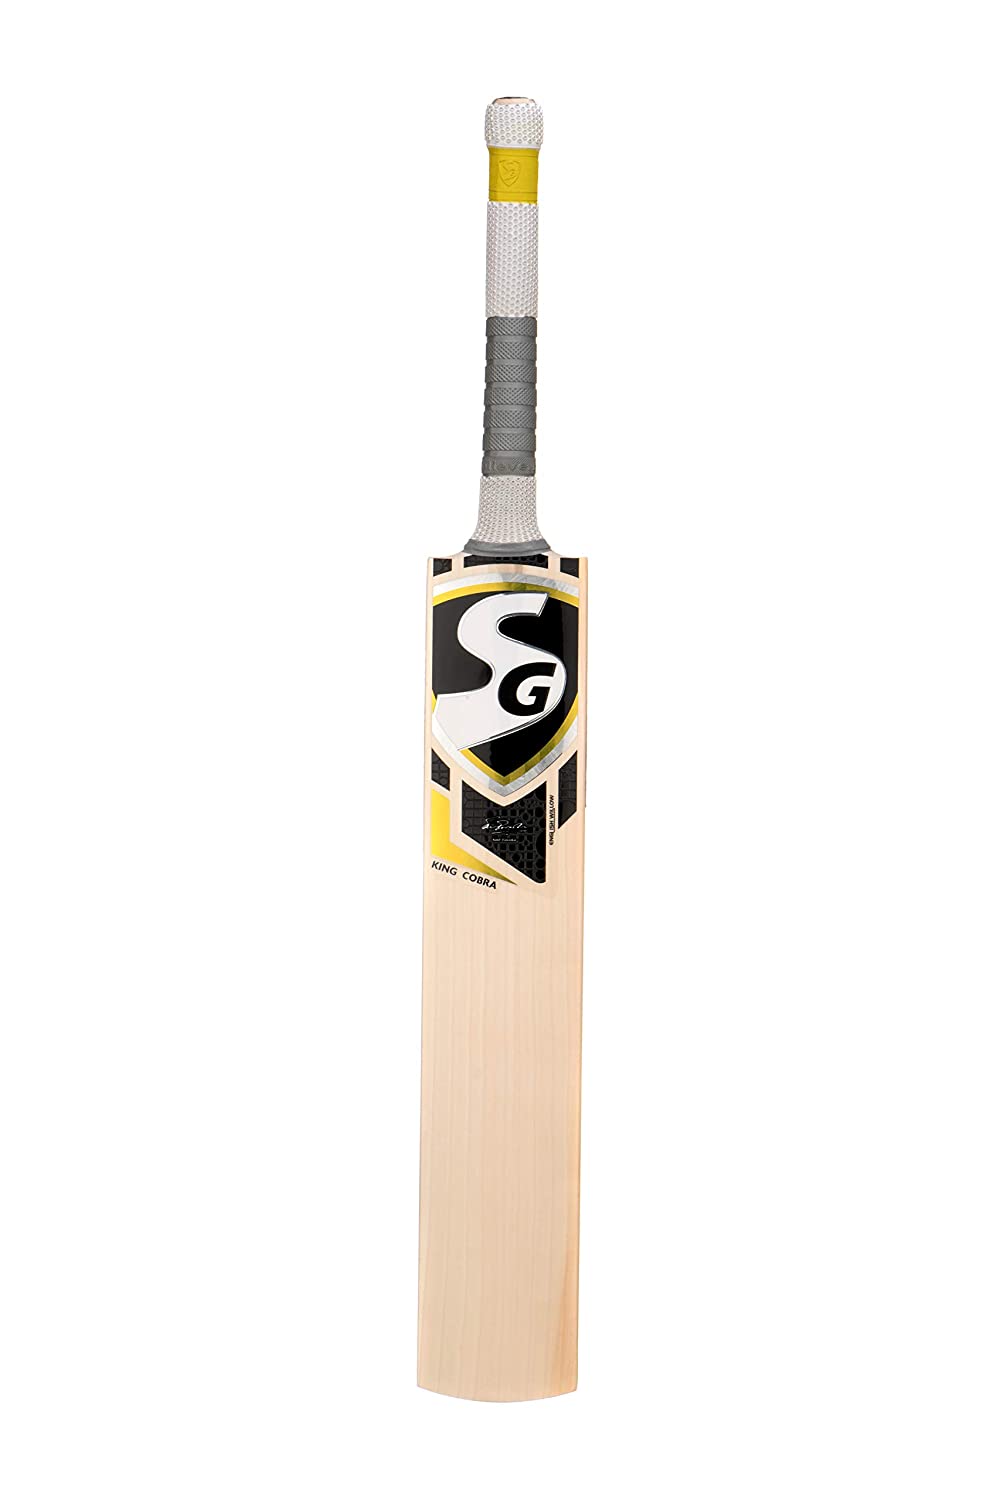 SG King Cobra English Willow Cricket Bat